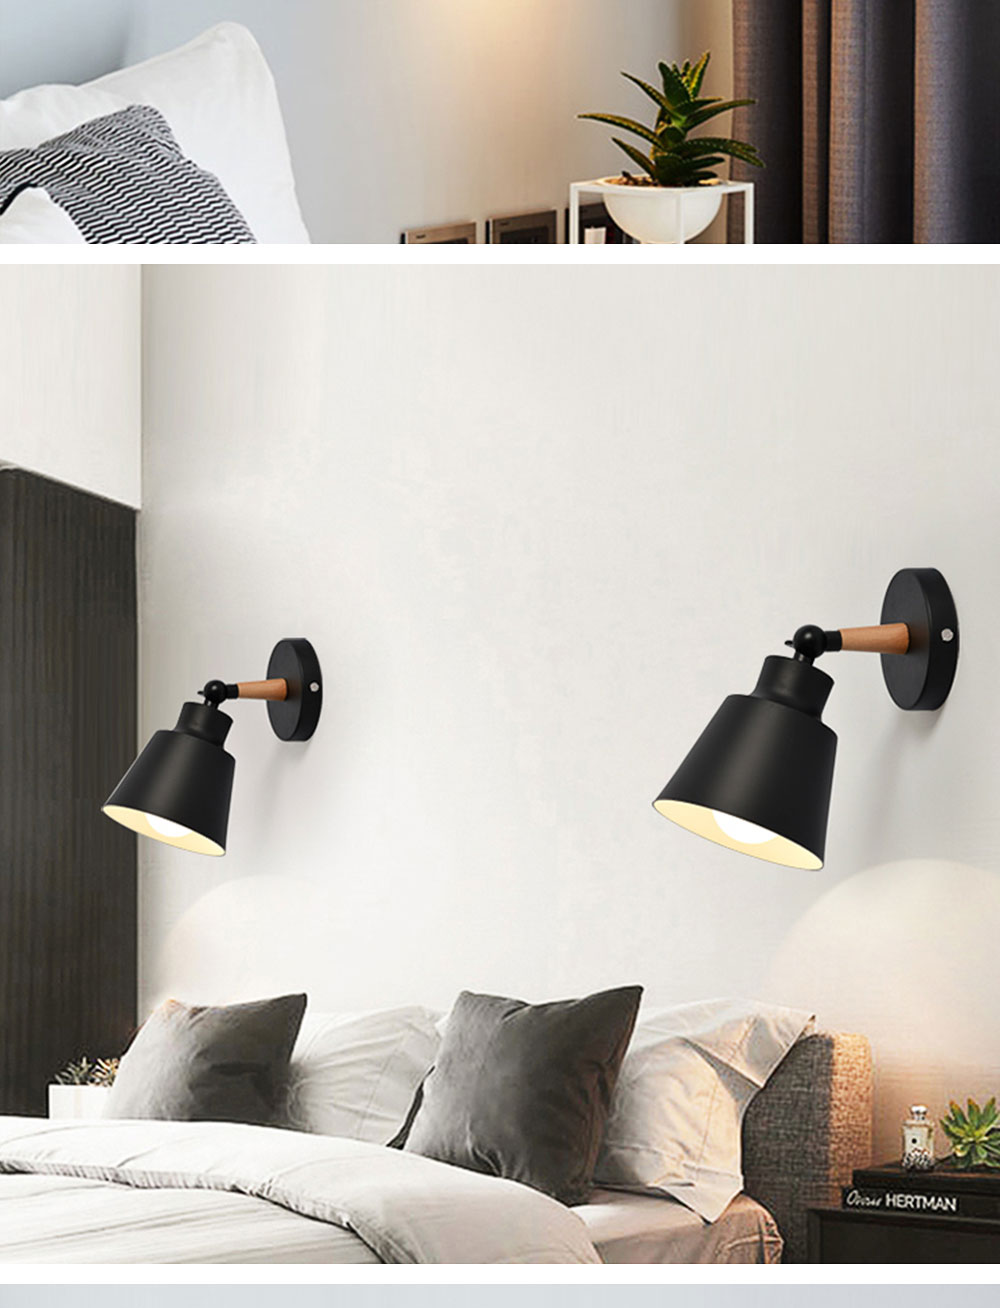 ASCELINA Hot Nordic Style Indoor Lighting  LED Wall Lamp Modern Wooden Bedroom Bracket Light Household Living Room Bathroom Lamp